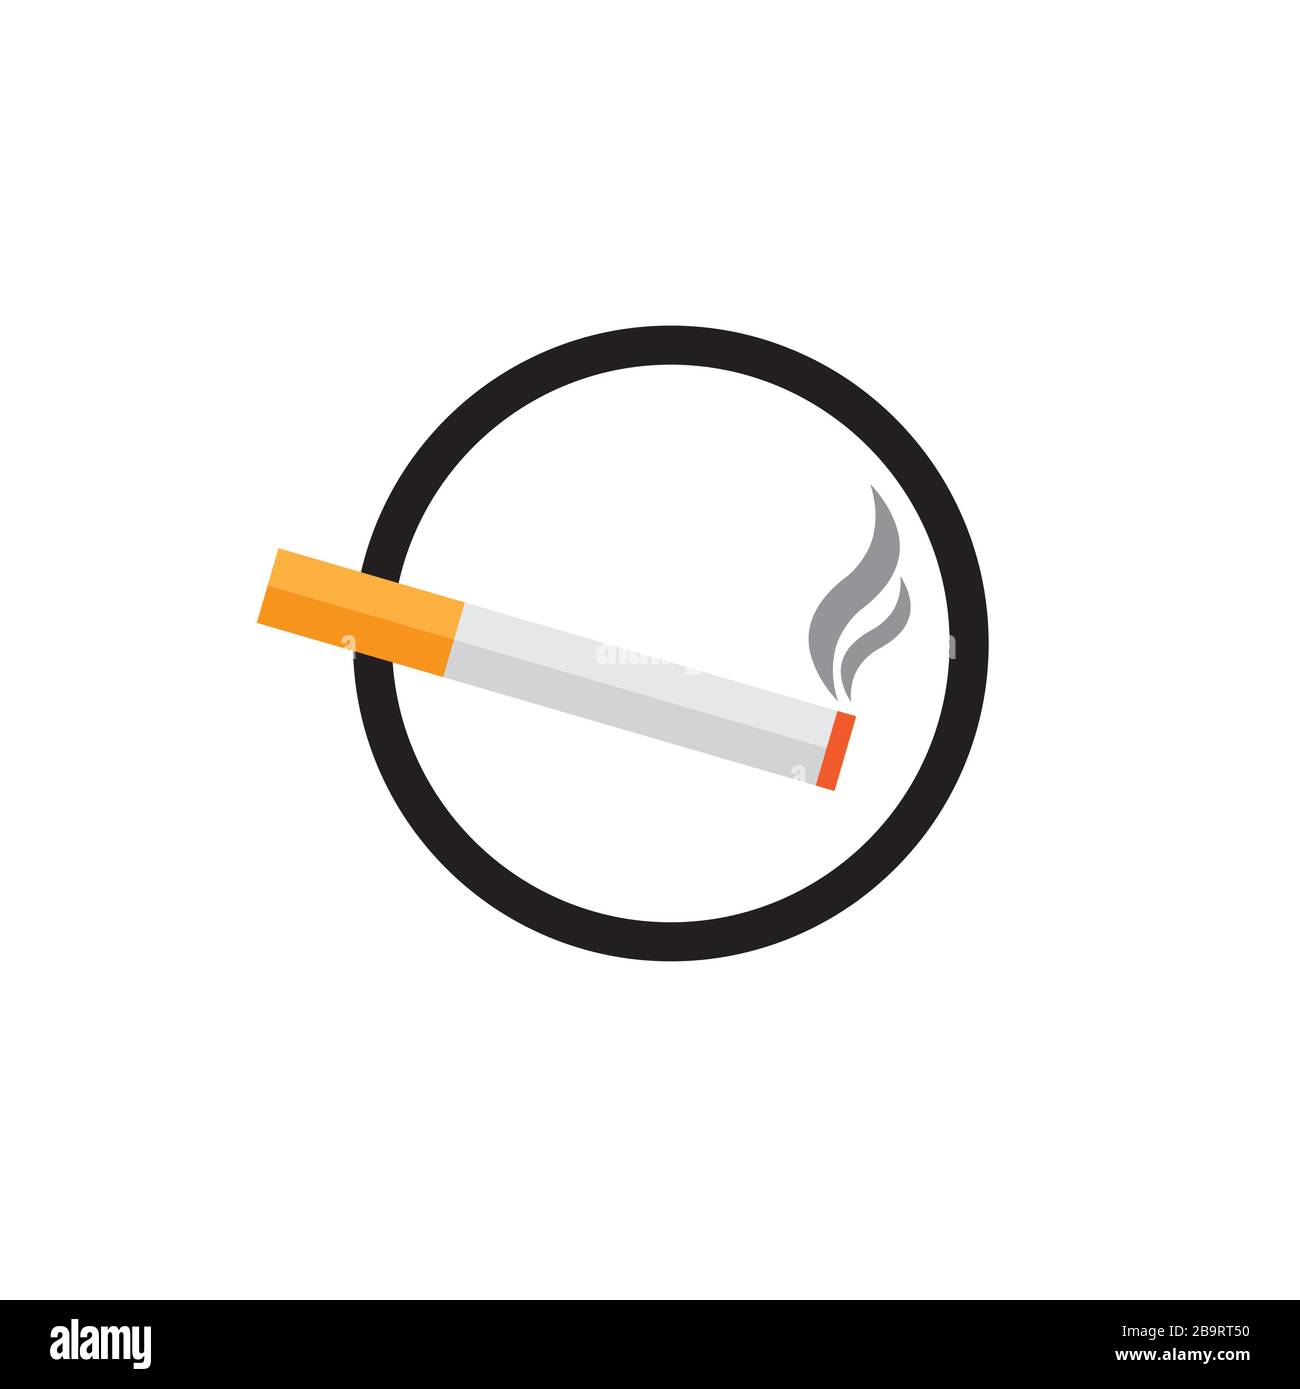 Smoking area vector and smoke icon in black circle Stock Vector